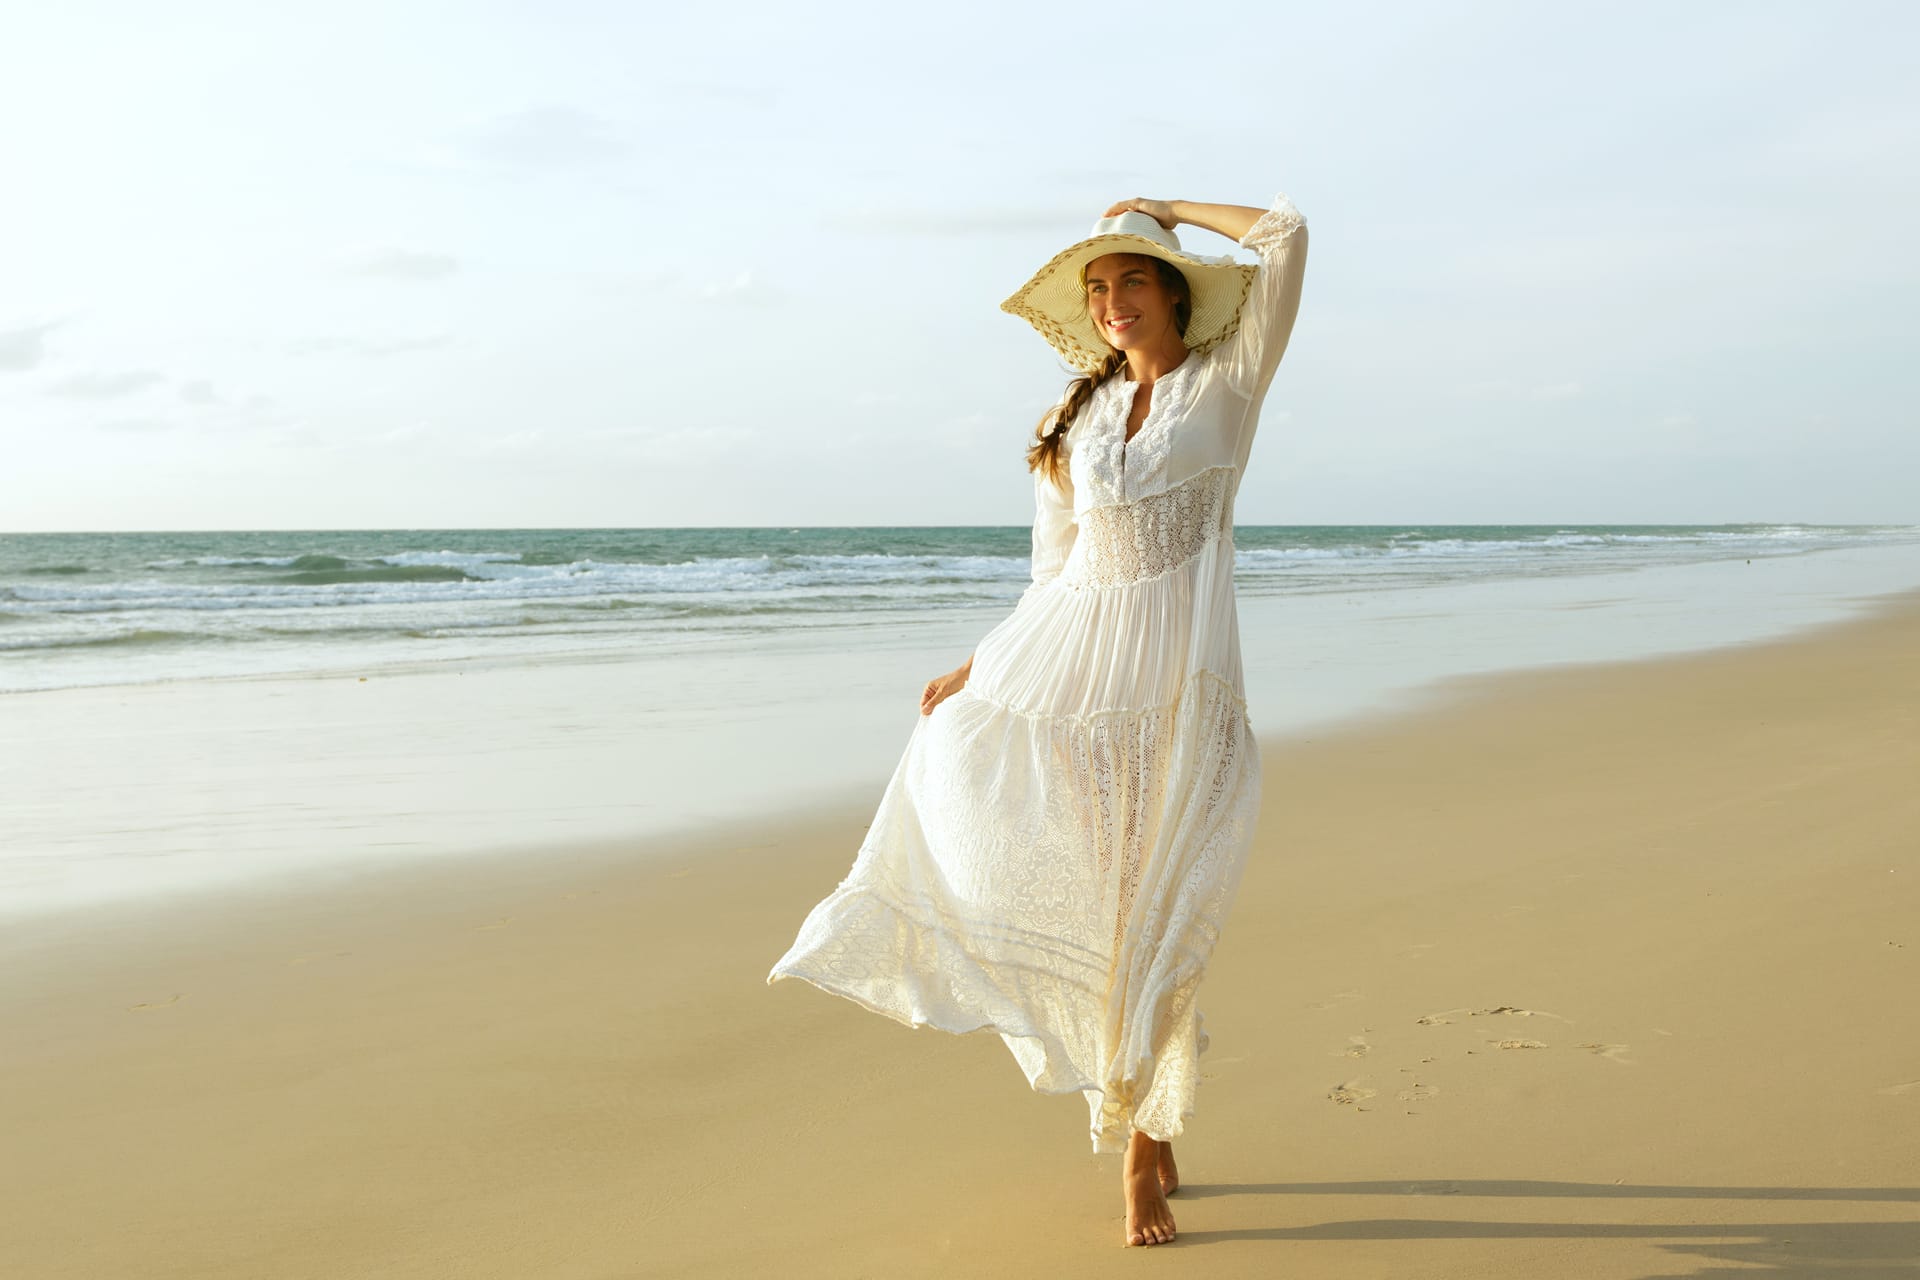 Woman wearing beautiful white dress is walking beach during sunset image